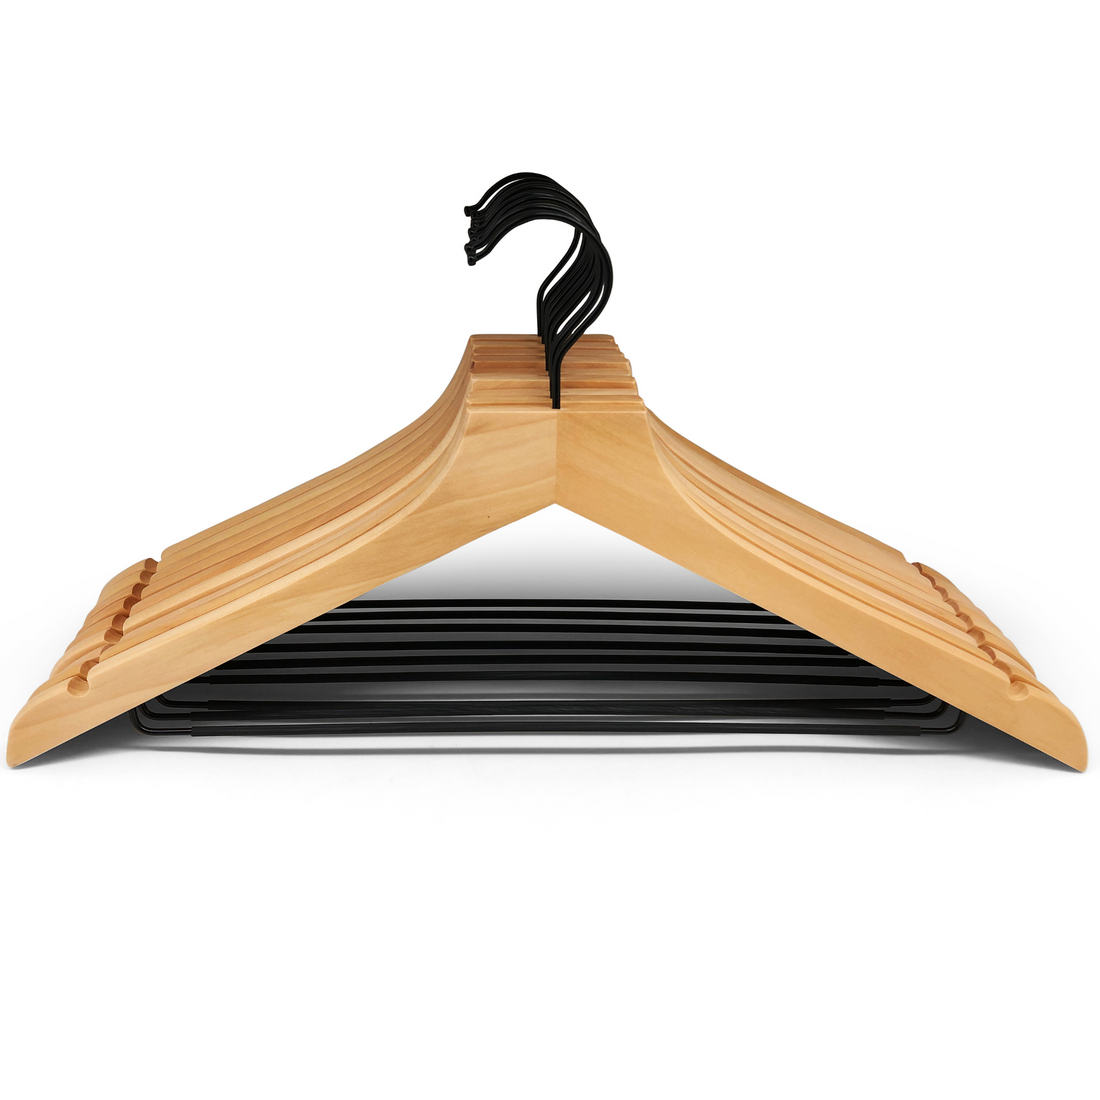 Signature Wood Hangers with Metal Non-Slip Pant Bar- Set of 20 (Natural)